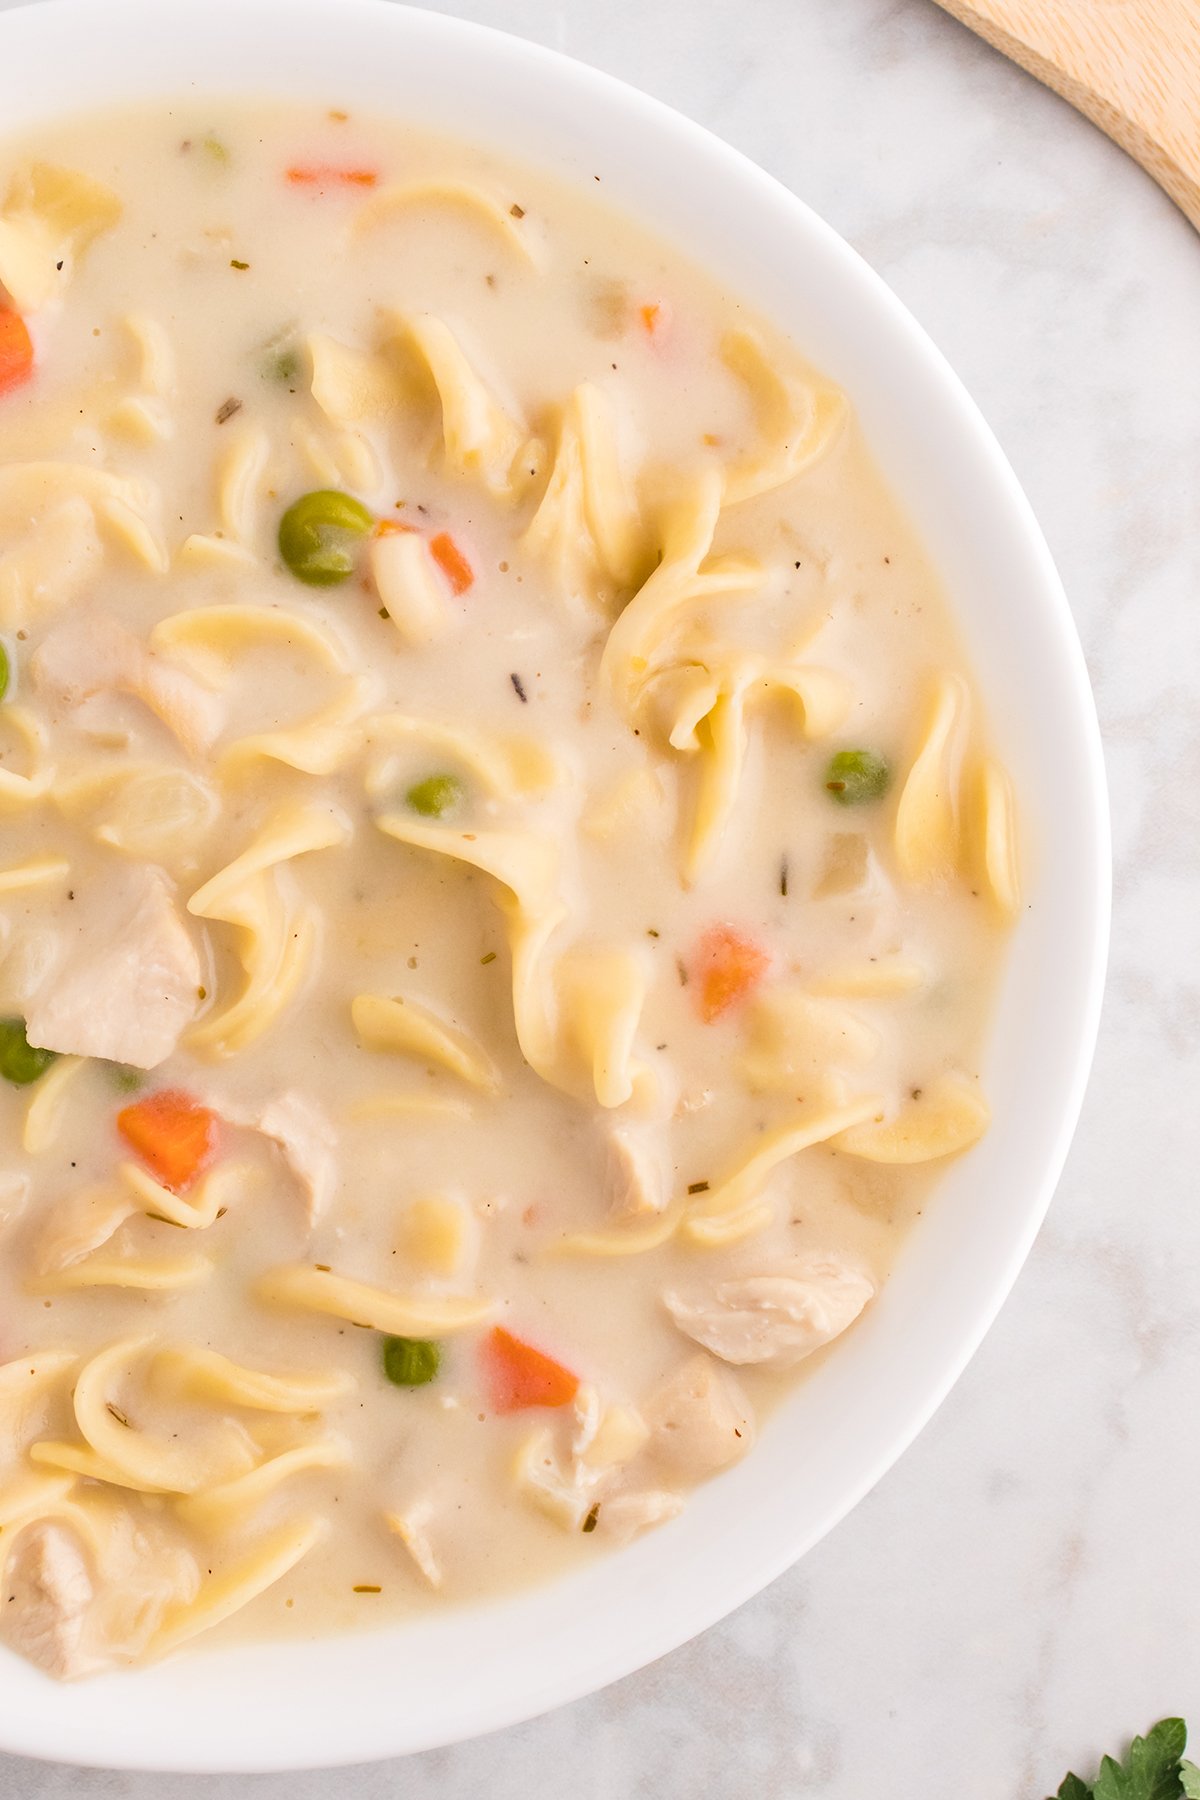 Italian Wedding Soup Recipe - Kristine's Kitchen